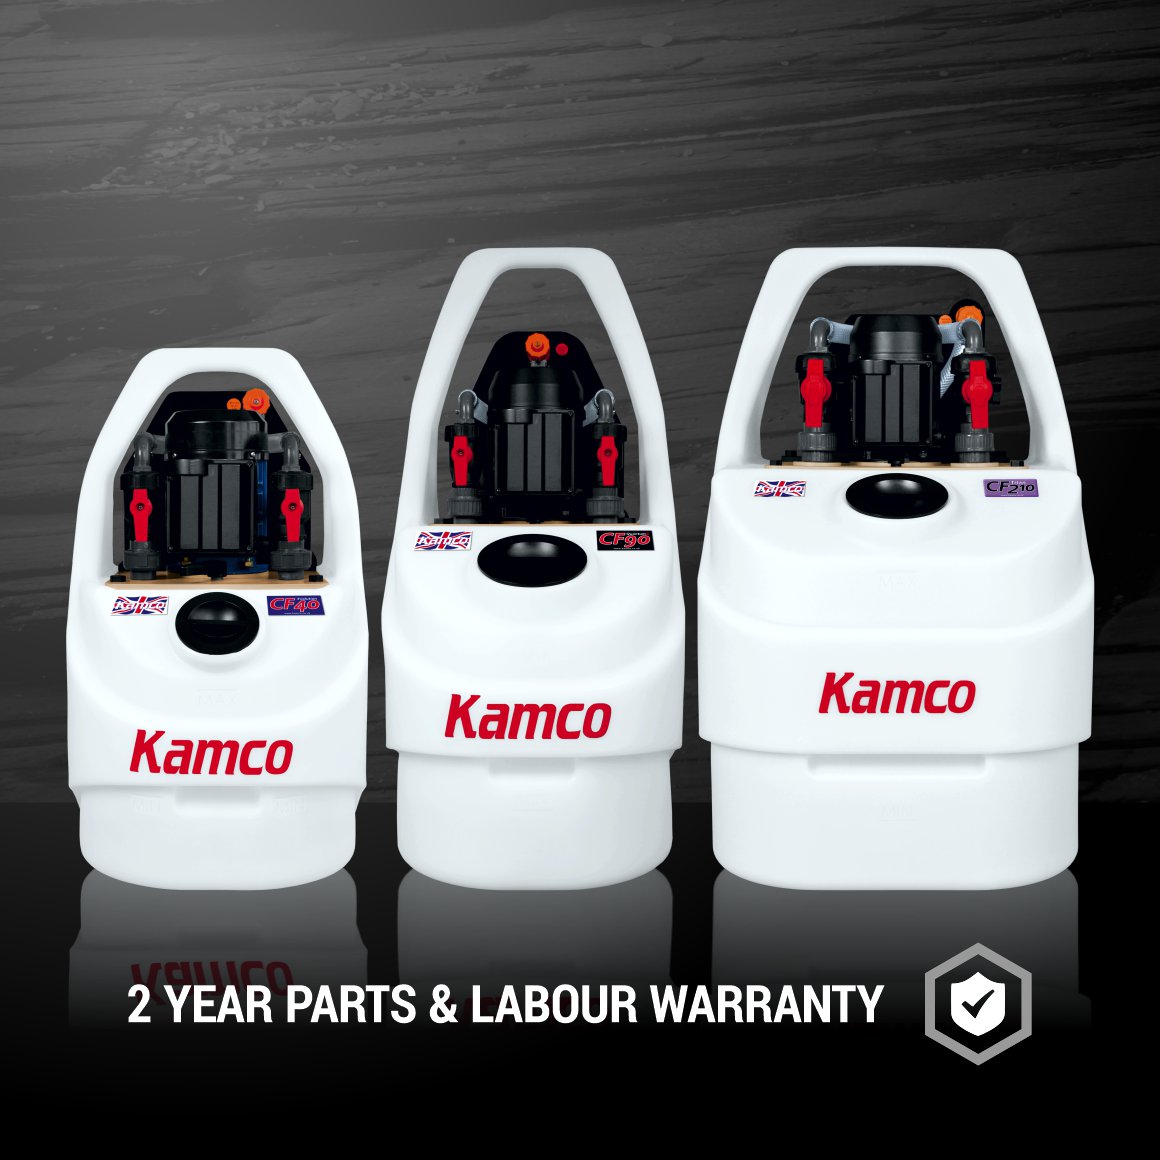 Kamco Power Flushing Pumps